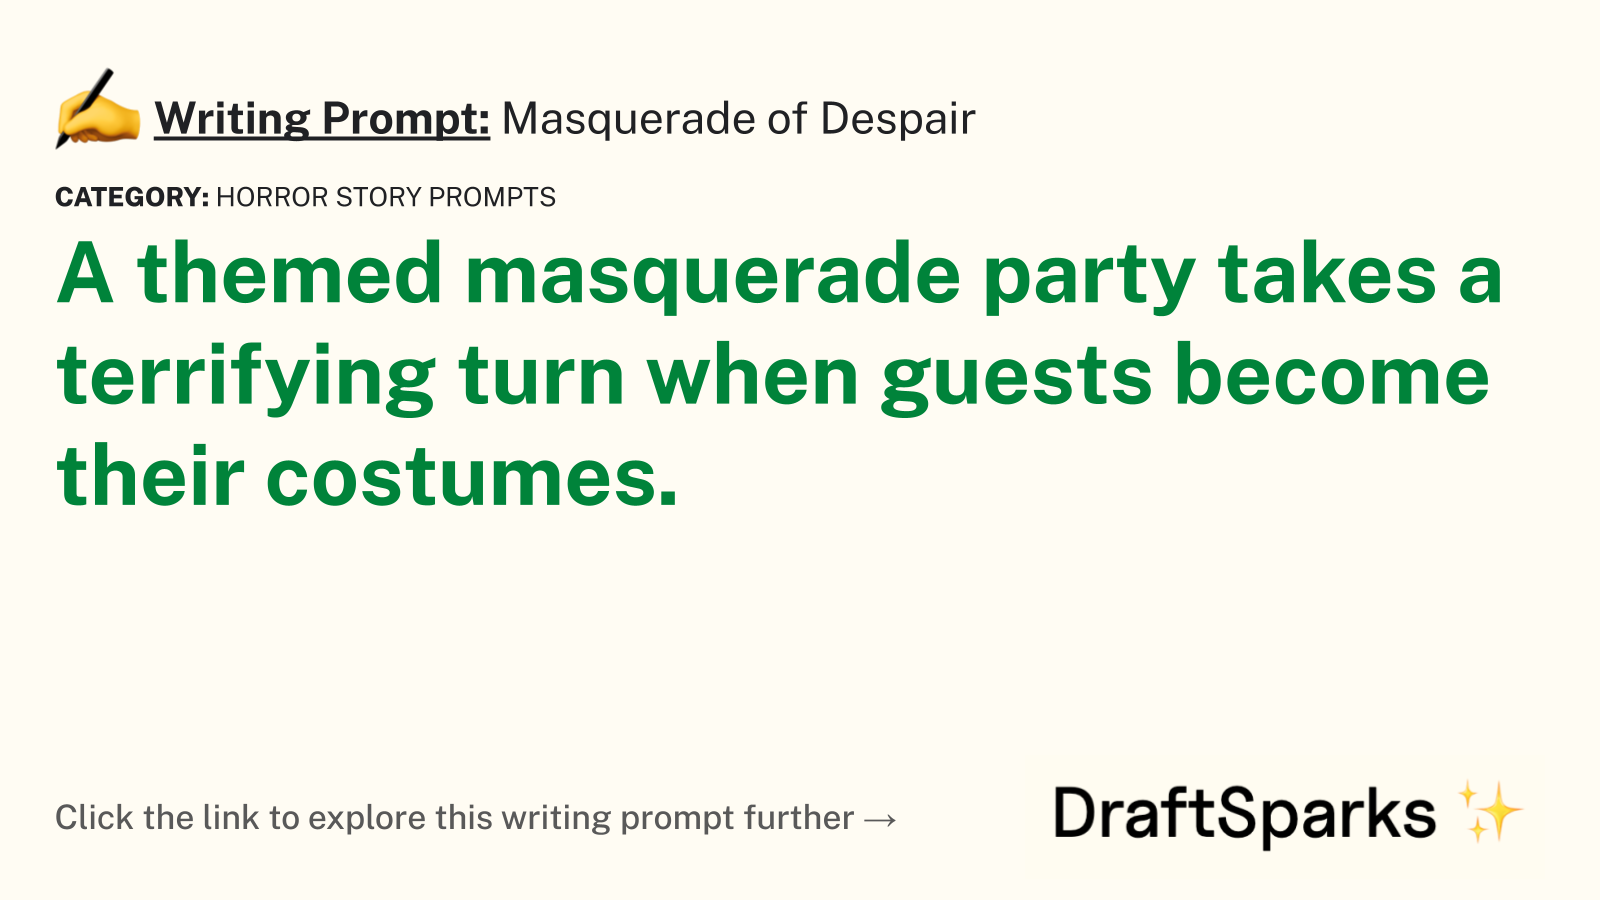 Masquerade of Despair